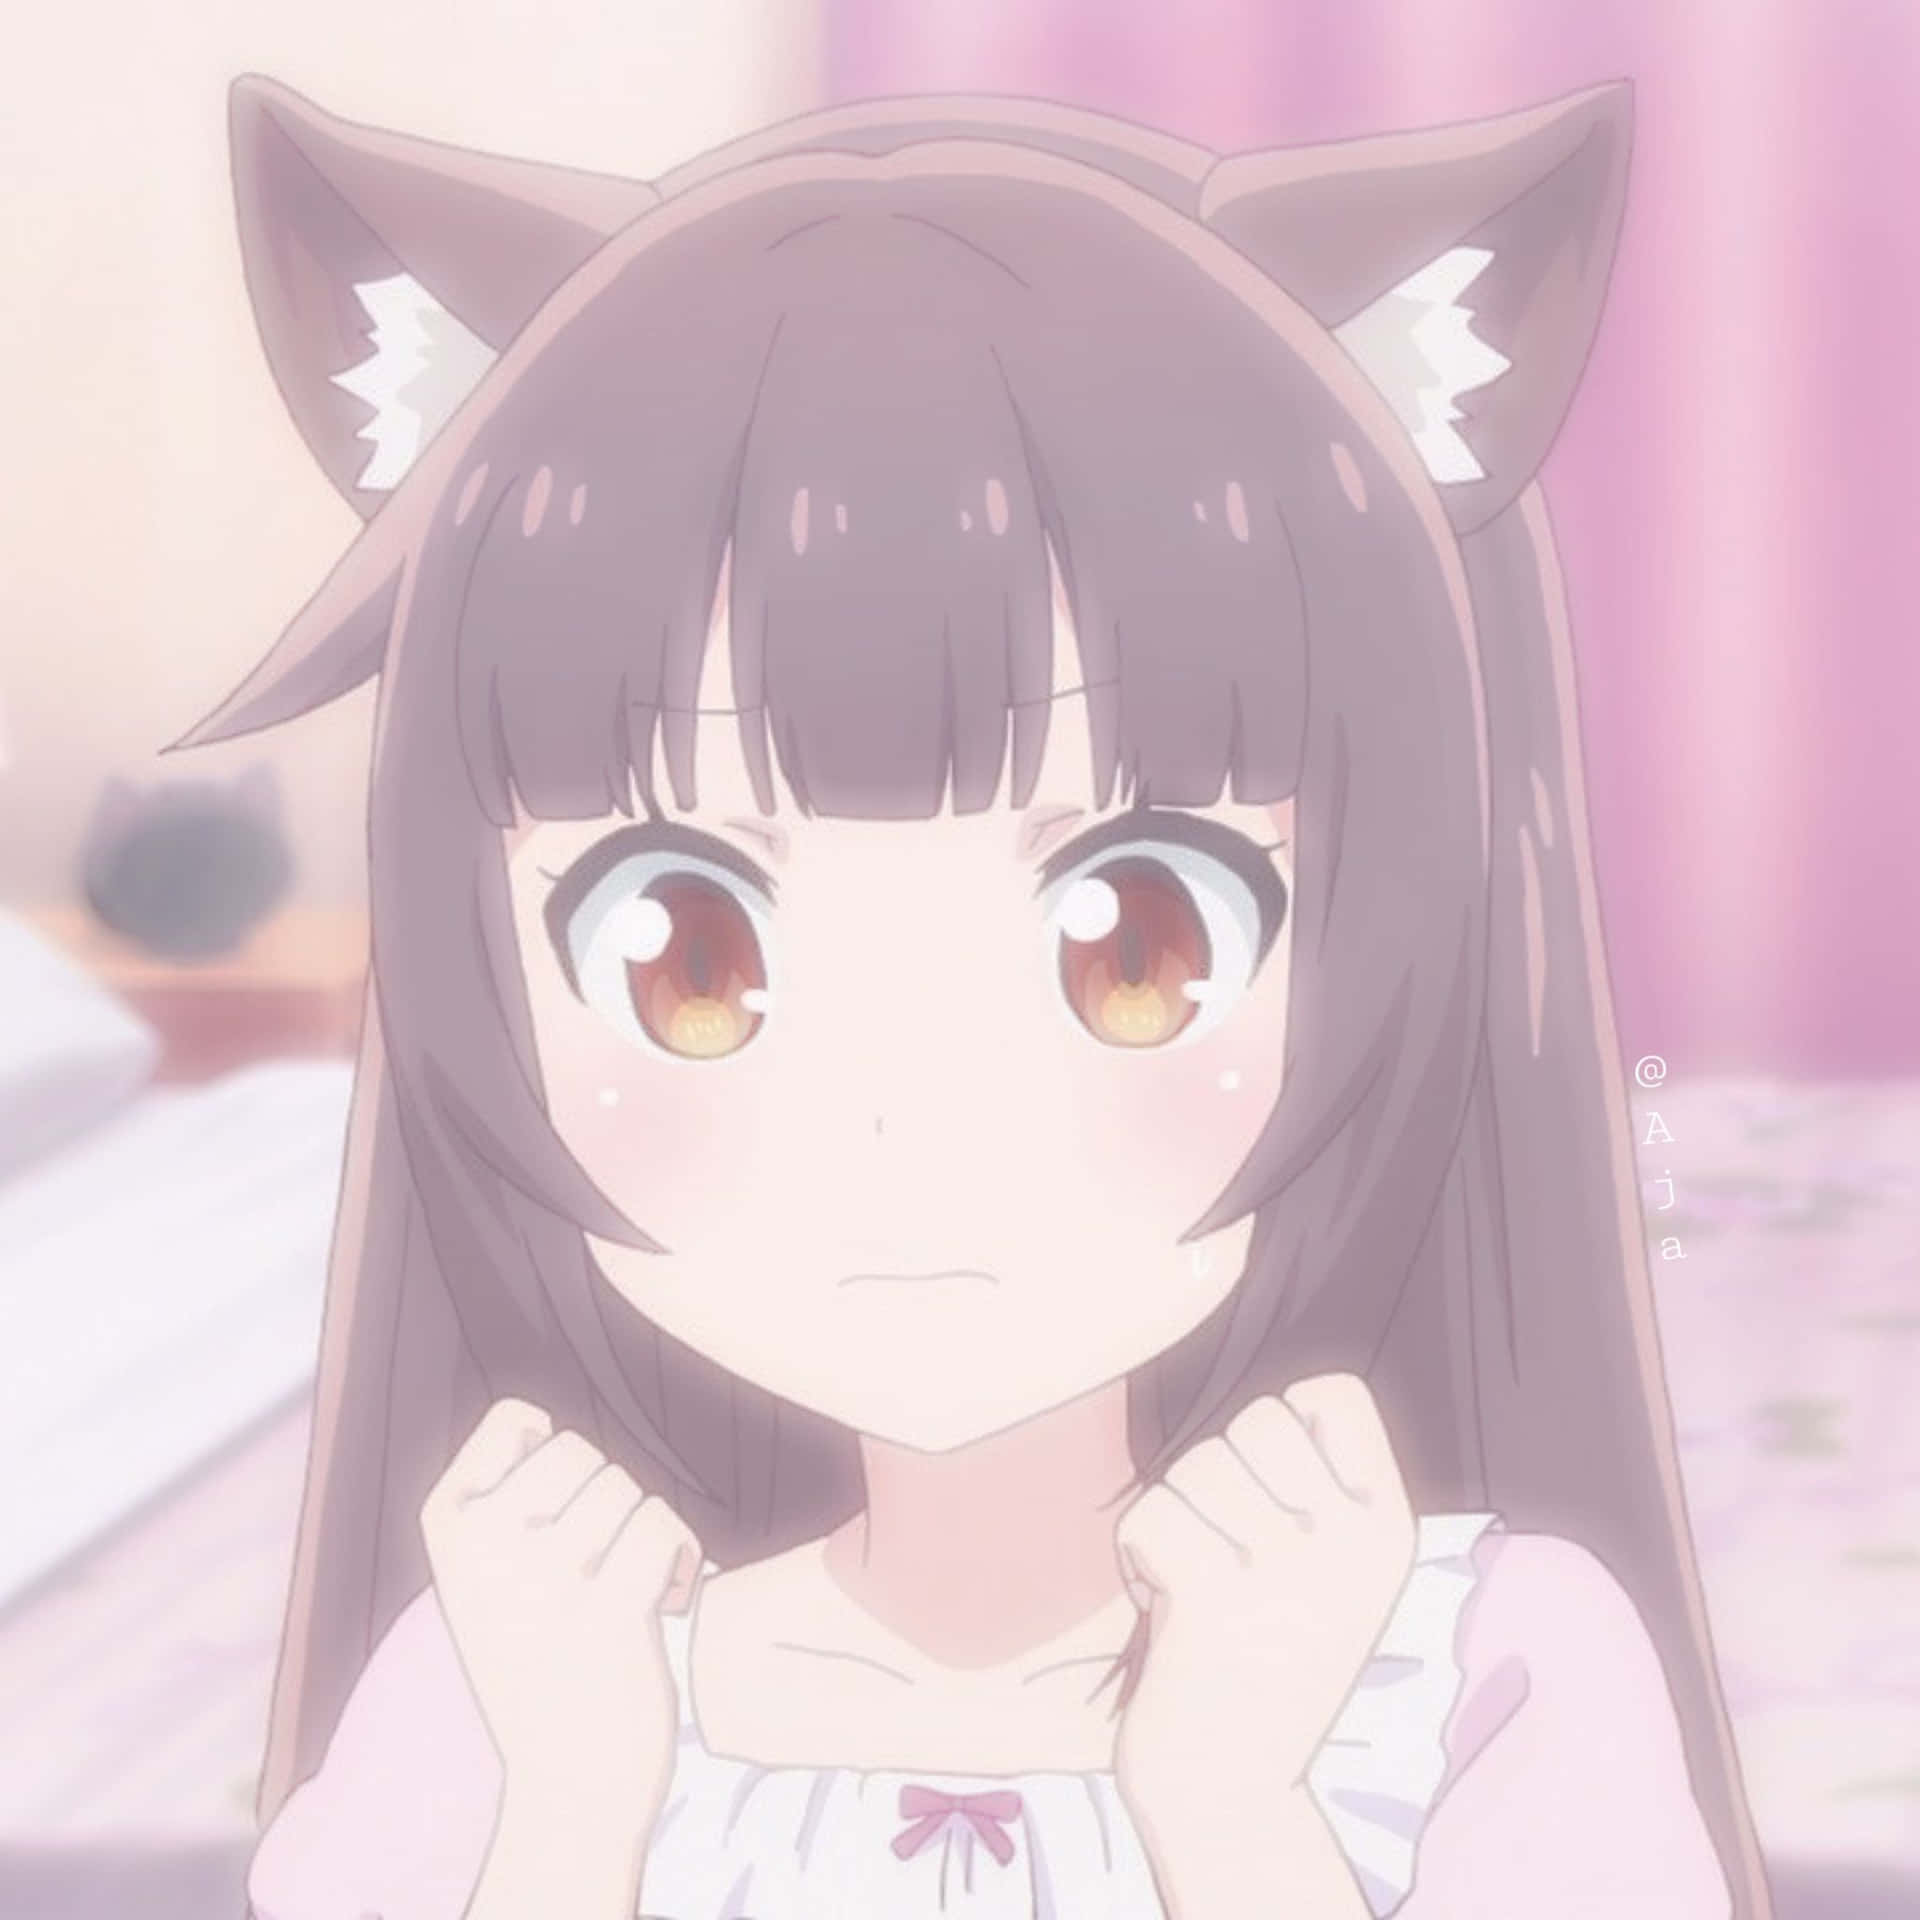 Kawaii Anime Girl With Cat Ears Wallpaper